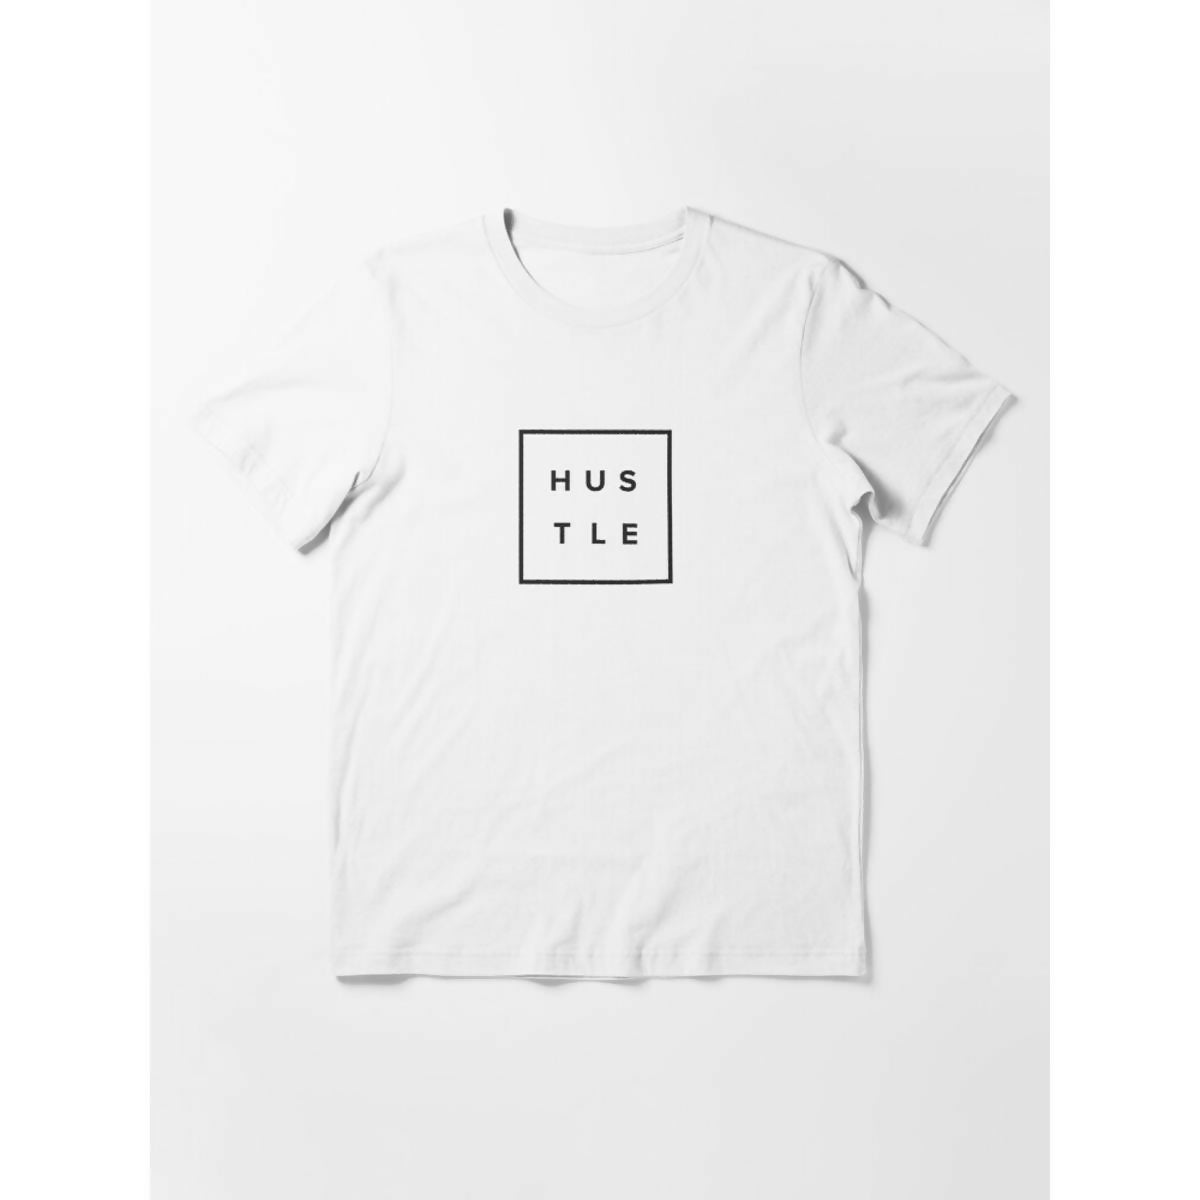 Khanani's Entrepreneur gift shirts hustle - ValueBox